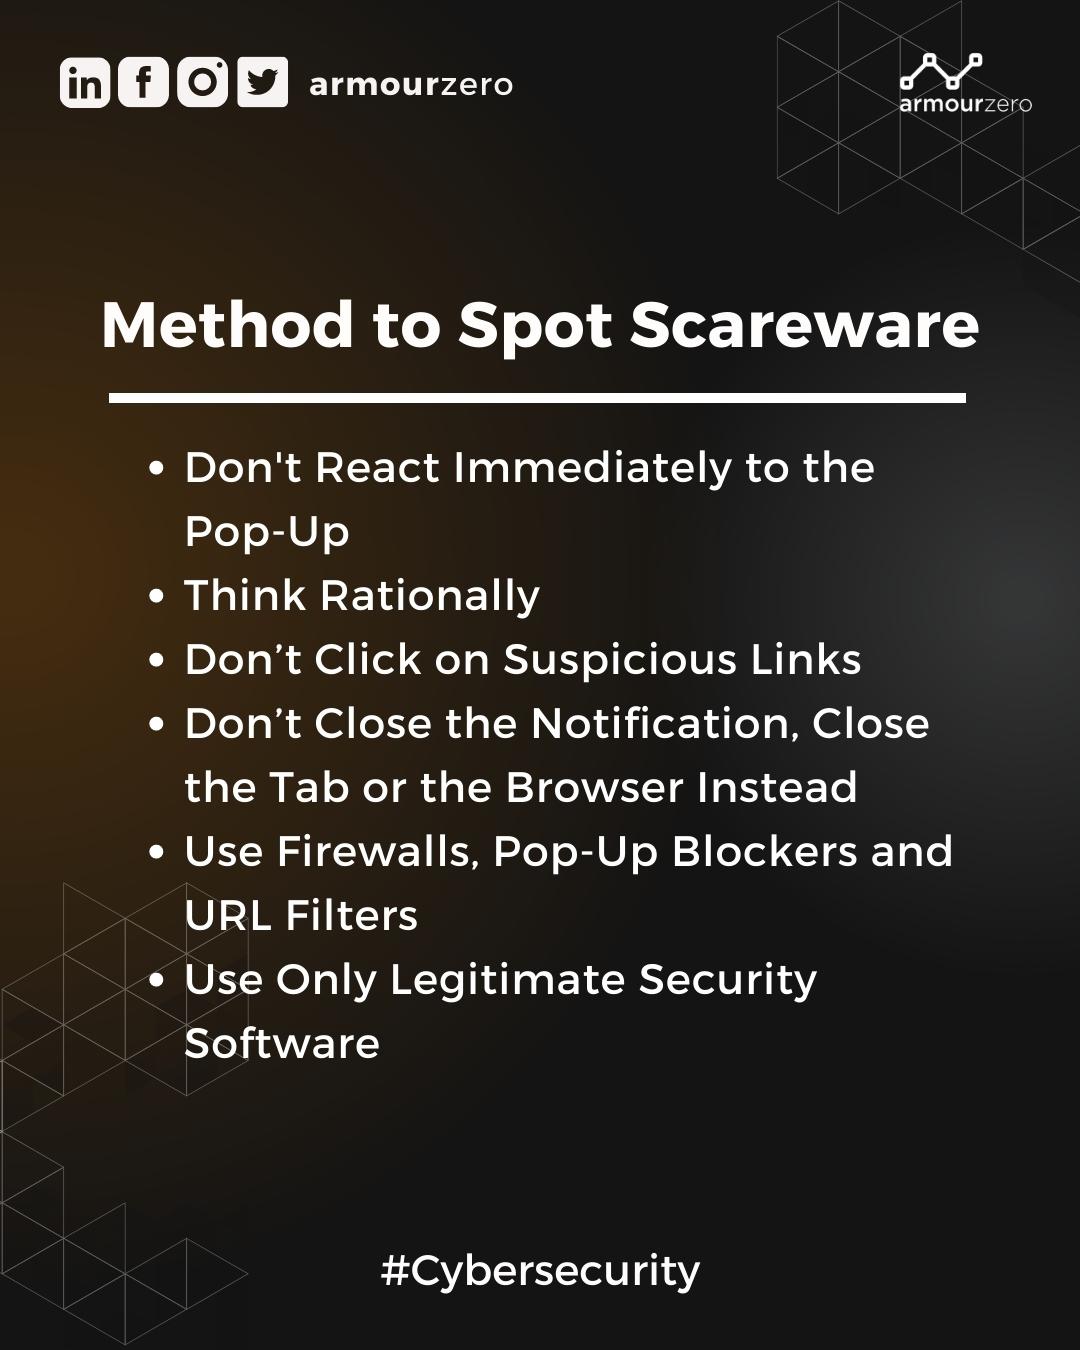 Method to Spot Scare Software aka Scareware